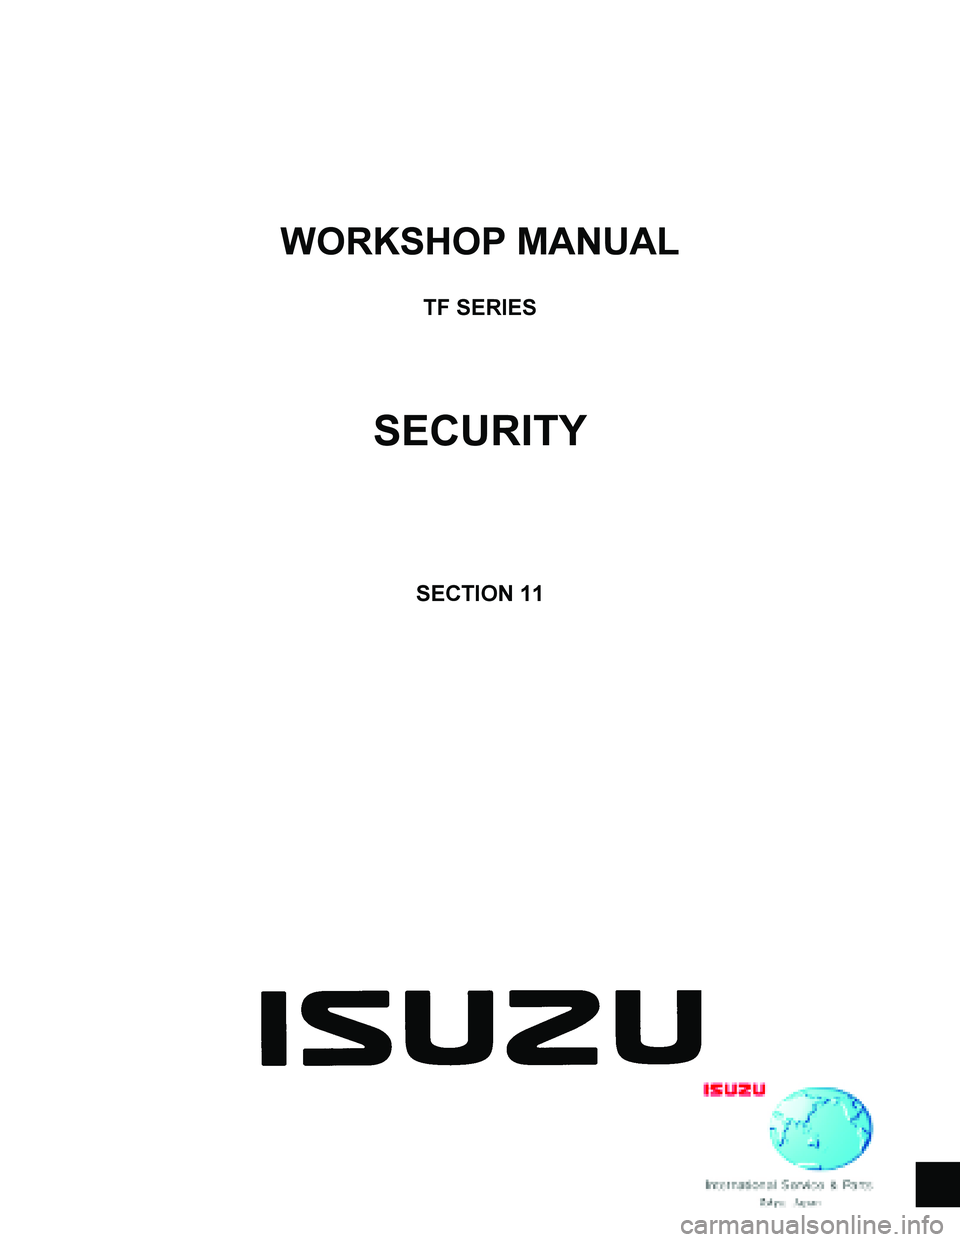 ISUZU TF SERIES 2004  Workshop Manual  
WORKSHOP MANUAL 
 
TF SERIES 
 
 
 
 
SECURITY 
 
 
 
 
 
 
SECTION 11 
 
 
  